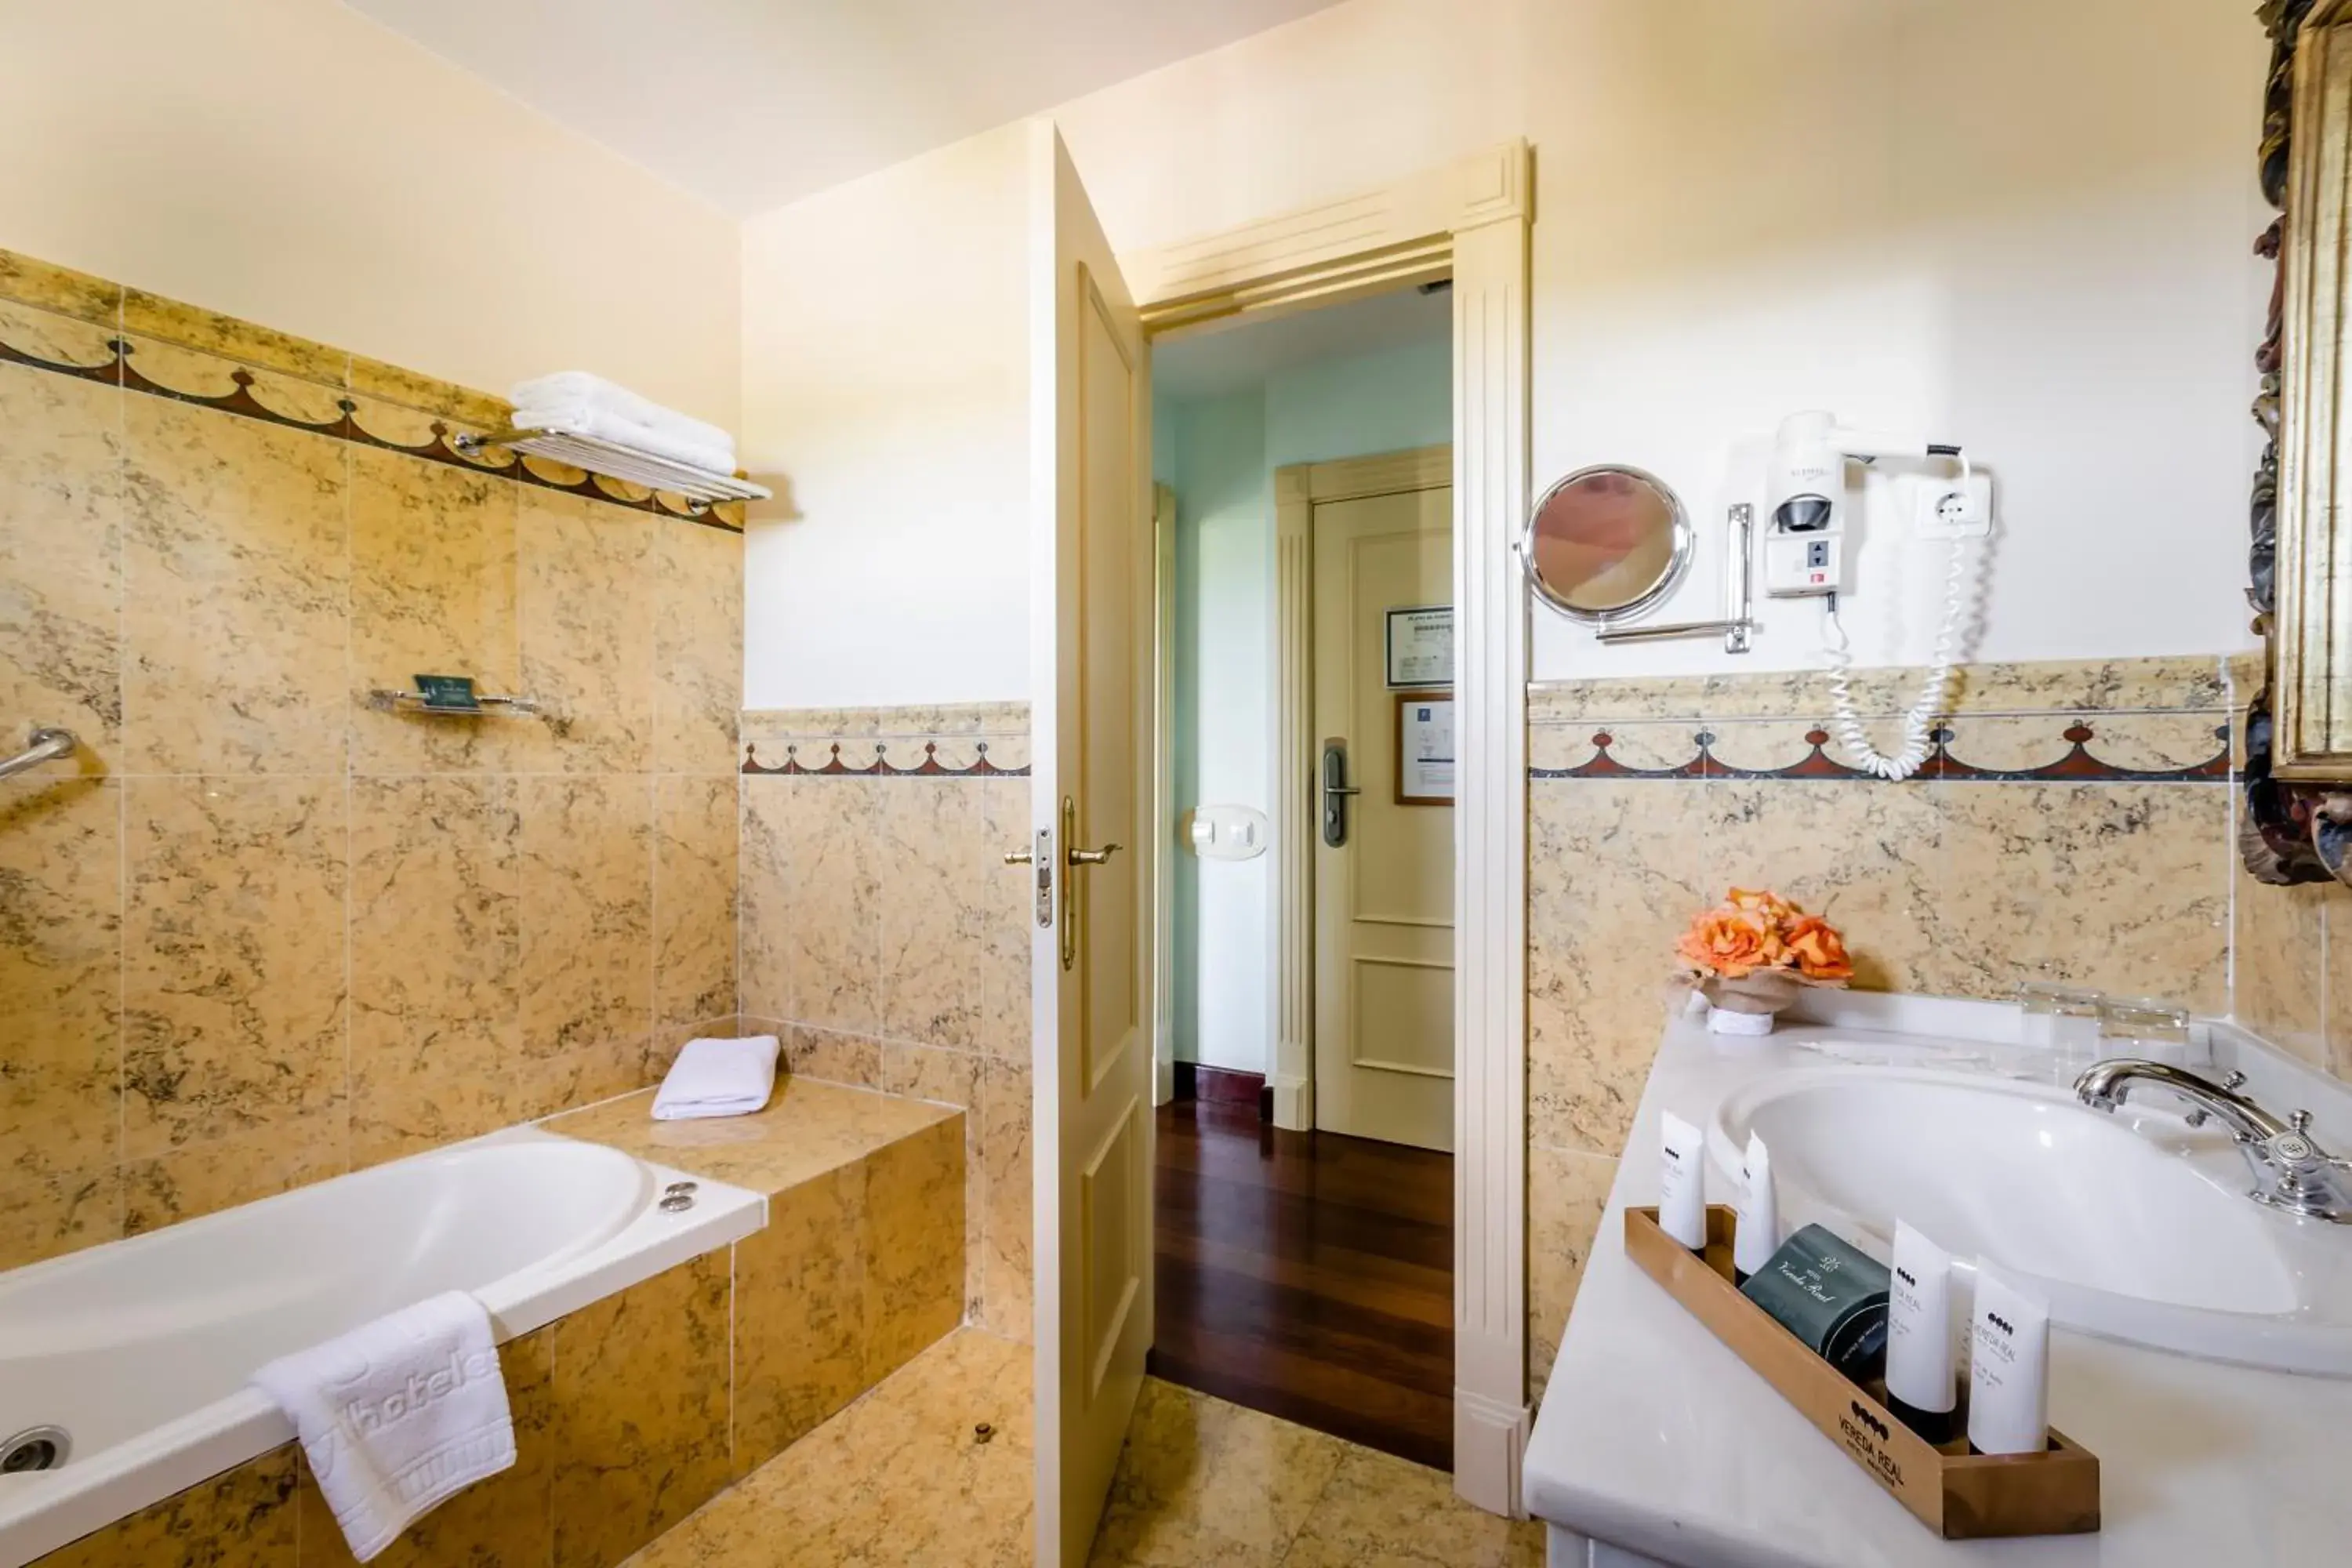 Steam room, Bathroom in YIT Vereda Real